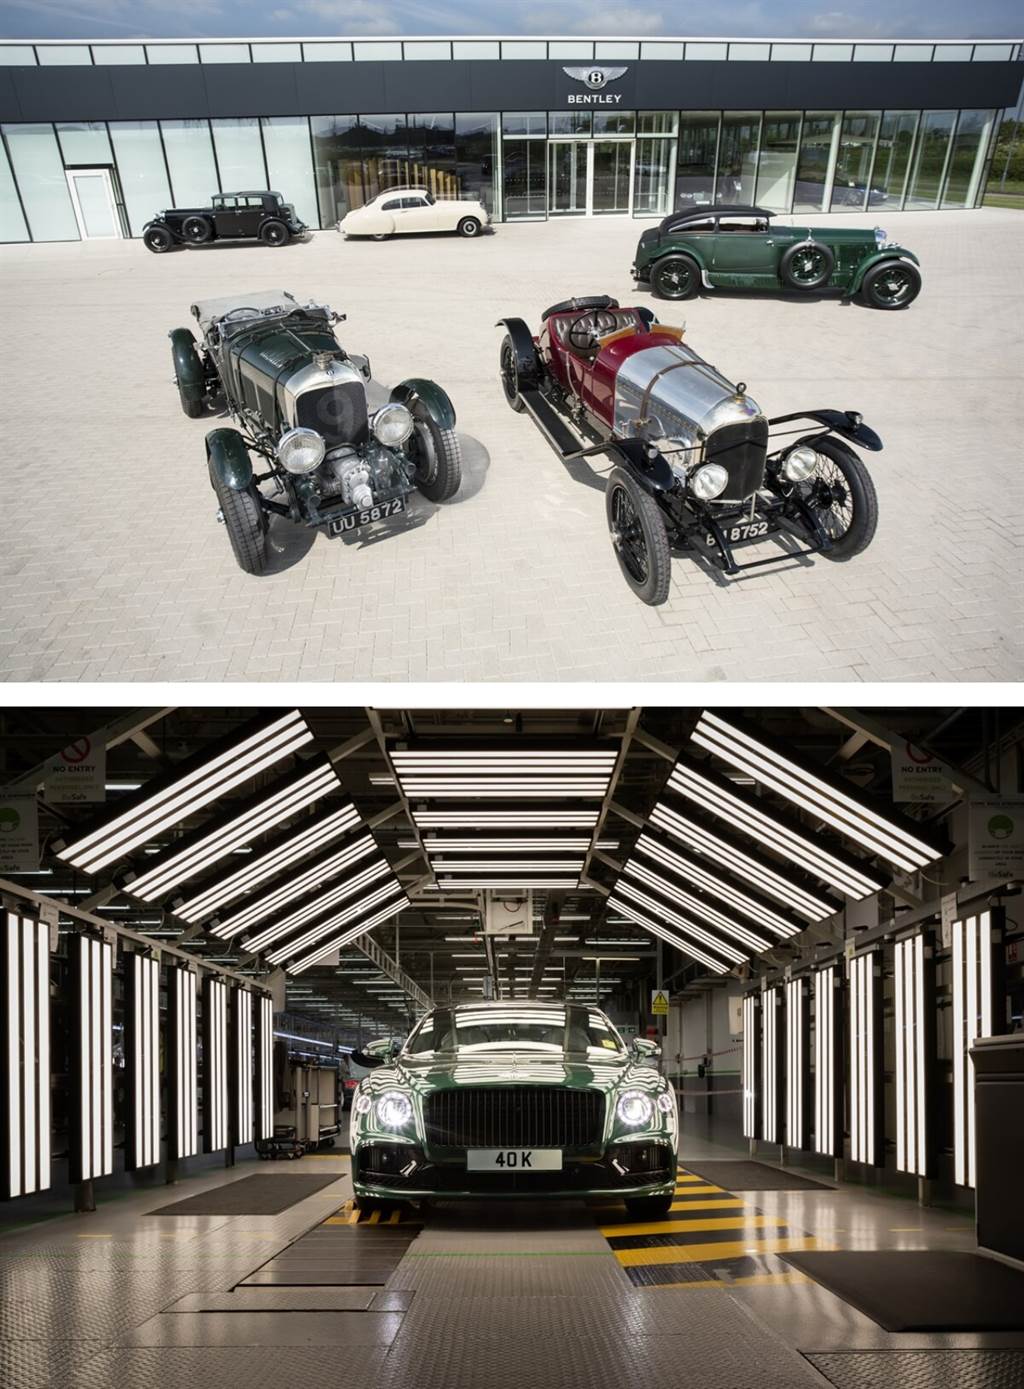 Bentley達成20萬輛生產里程碑 至今最大銷售量的車型為Continental GT